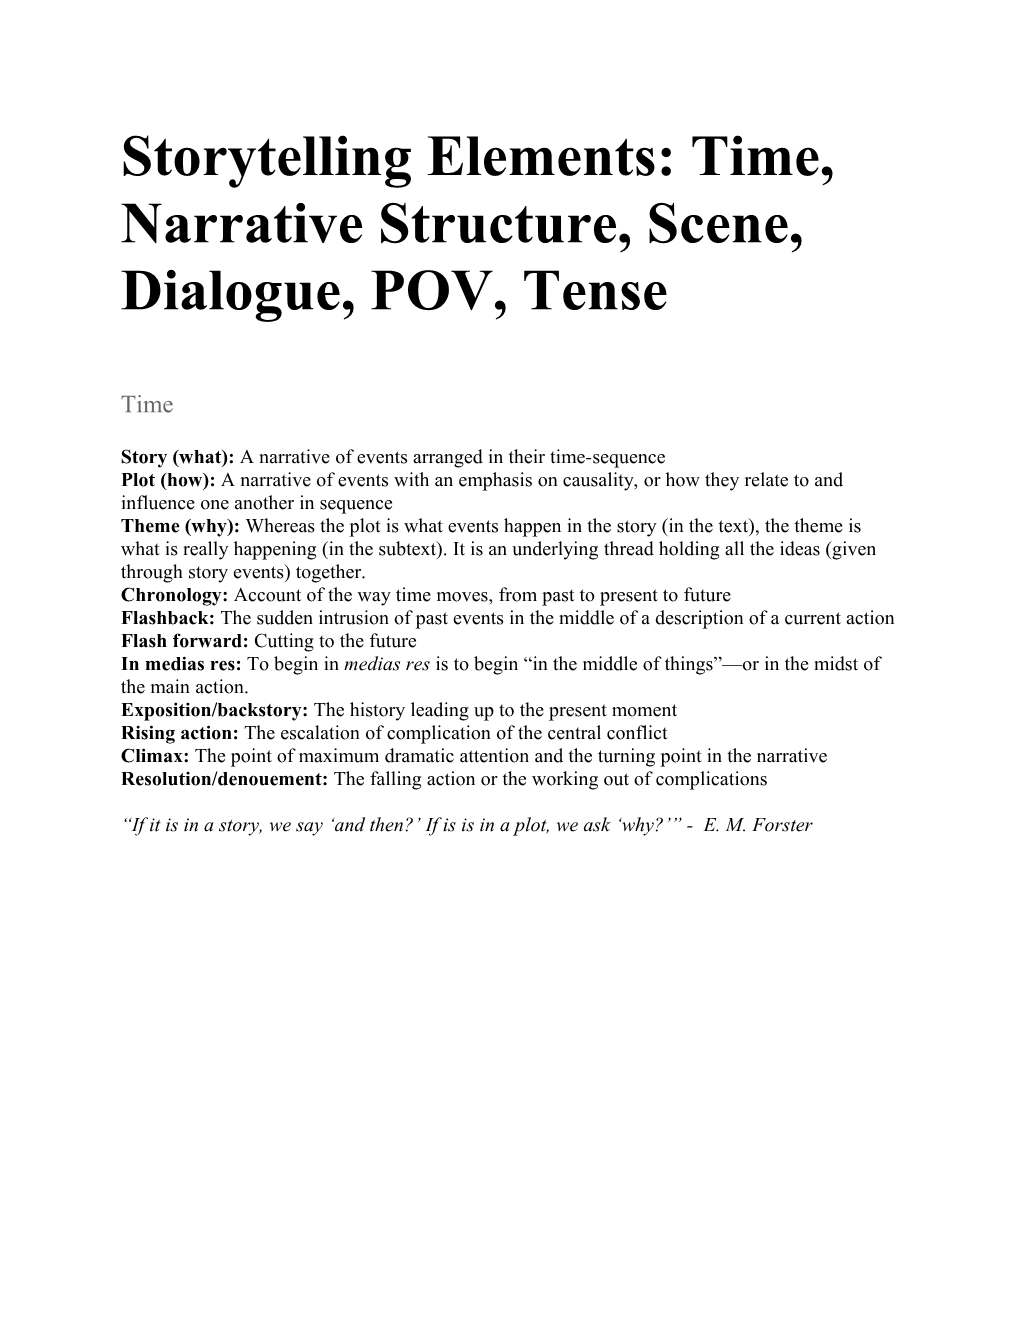 Storytelling Elements: Time, Narrative Structure, Scene, Dialogue, POV, Tense